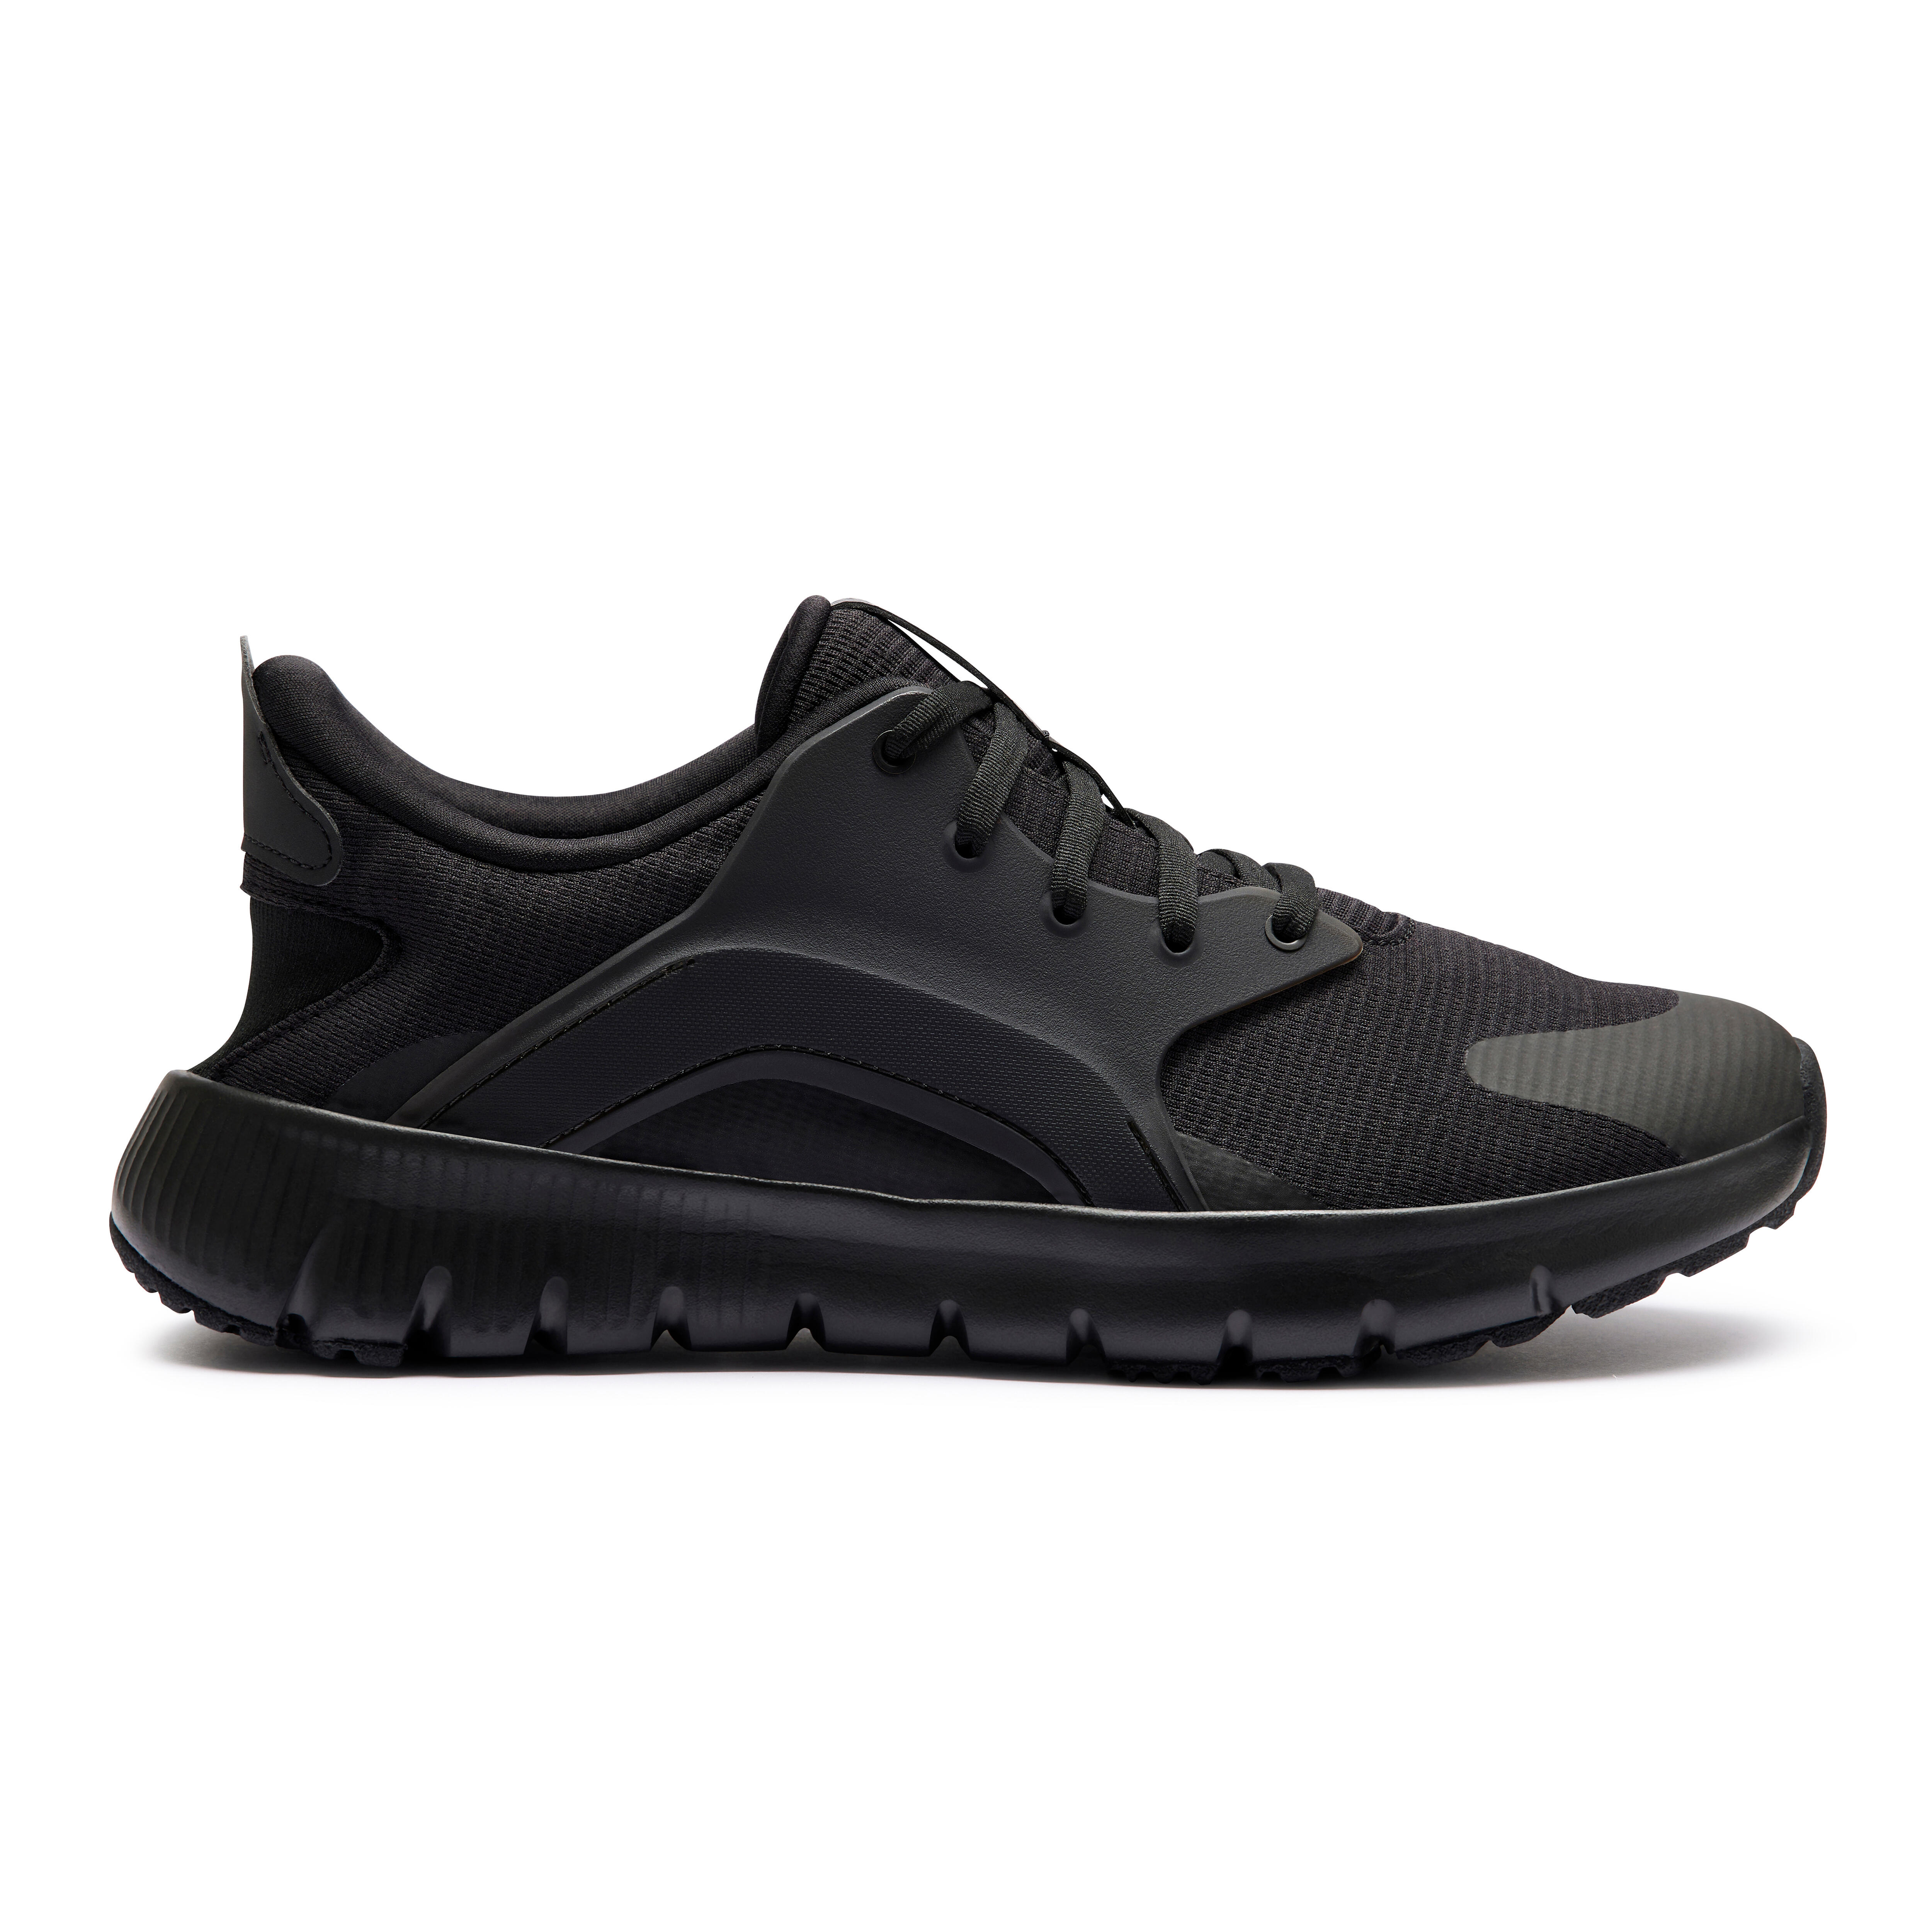 Kalenji Men's Standard Walking Shoes Sw500.1 - Black